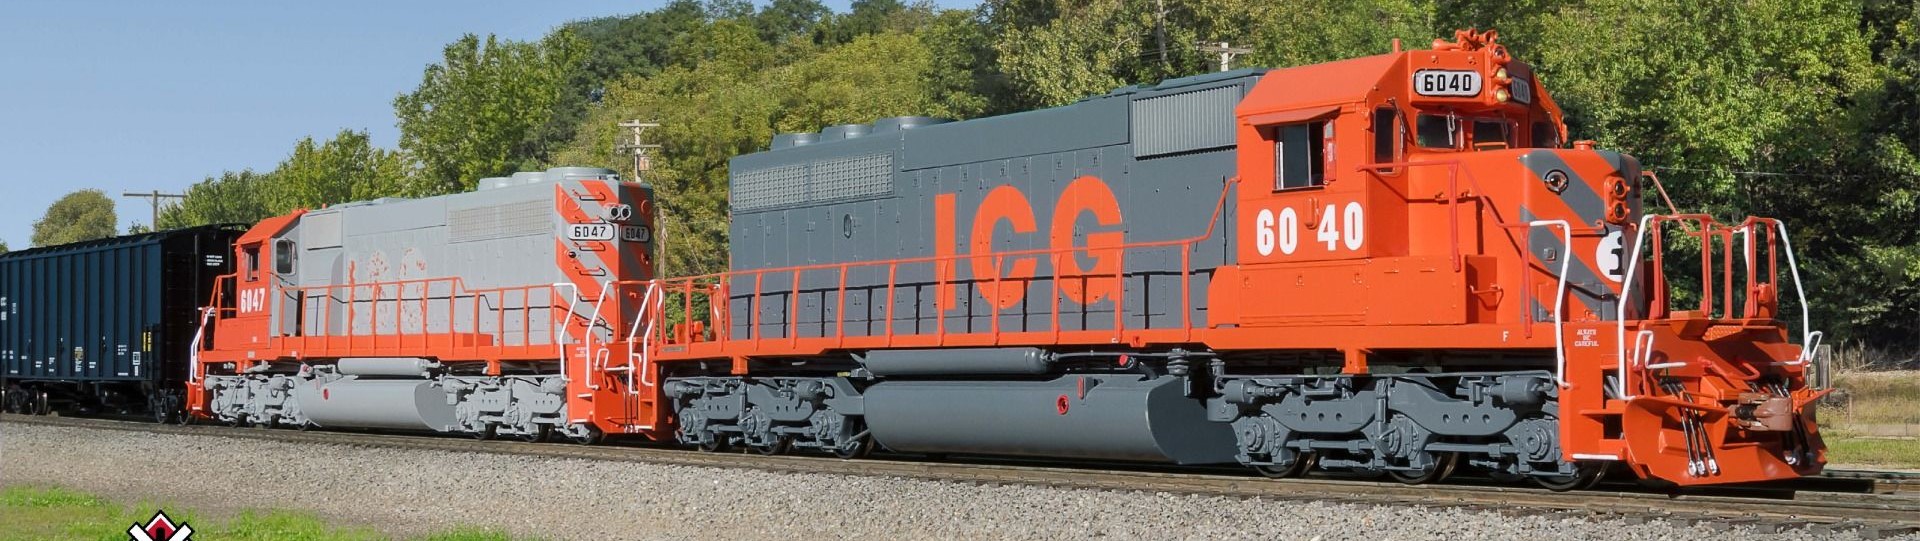 ScaleTrains Rivet Counter HO SXT38810 DCC Ready EMD SD40-2 Locomotive ICG 'Orange & Gray' ICG #6043